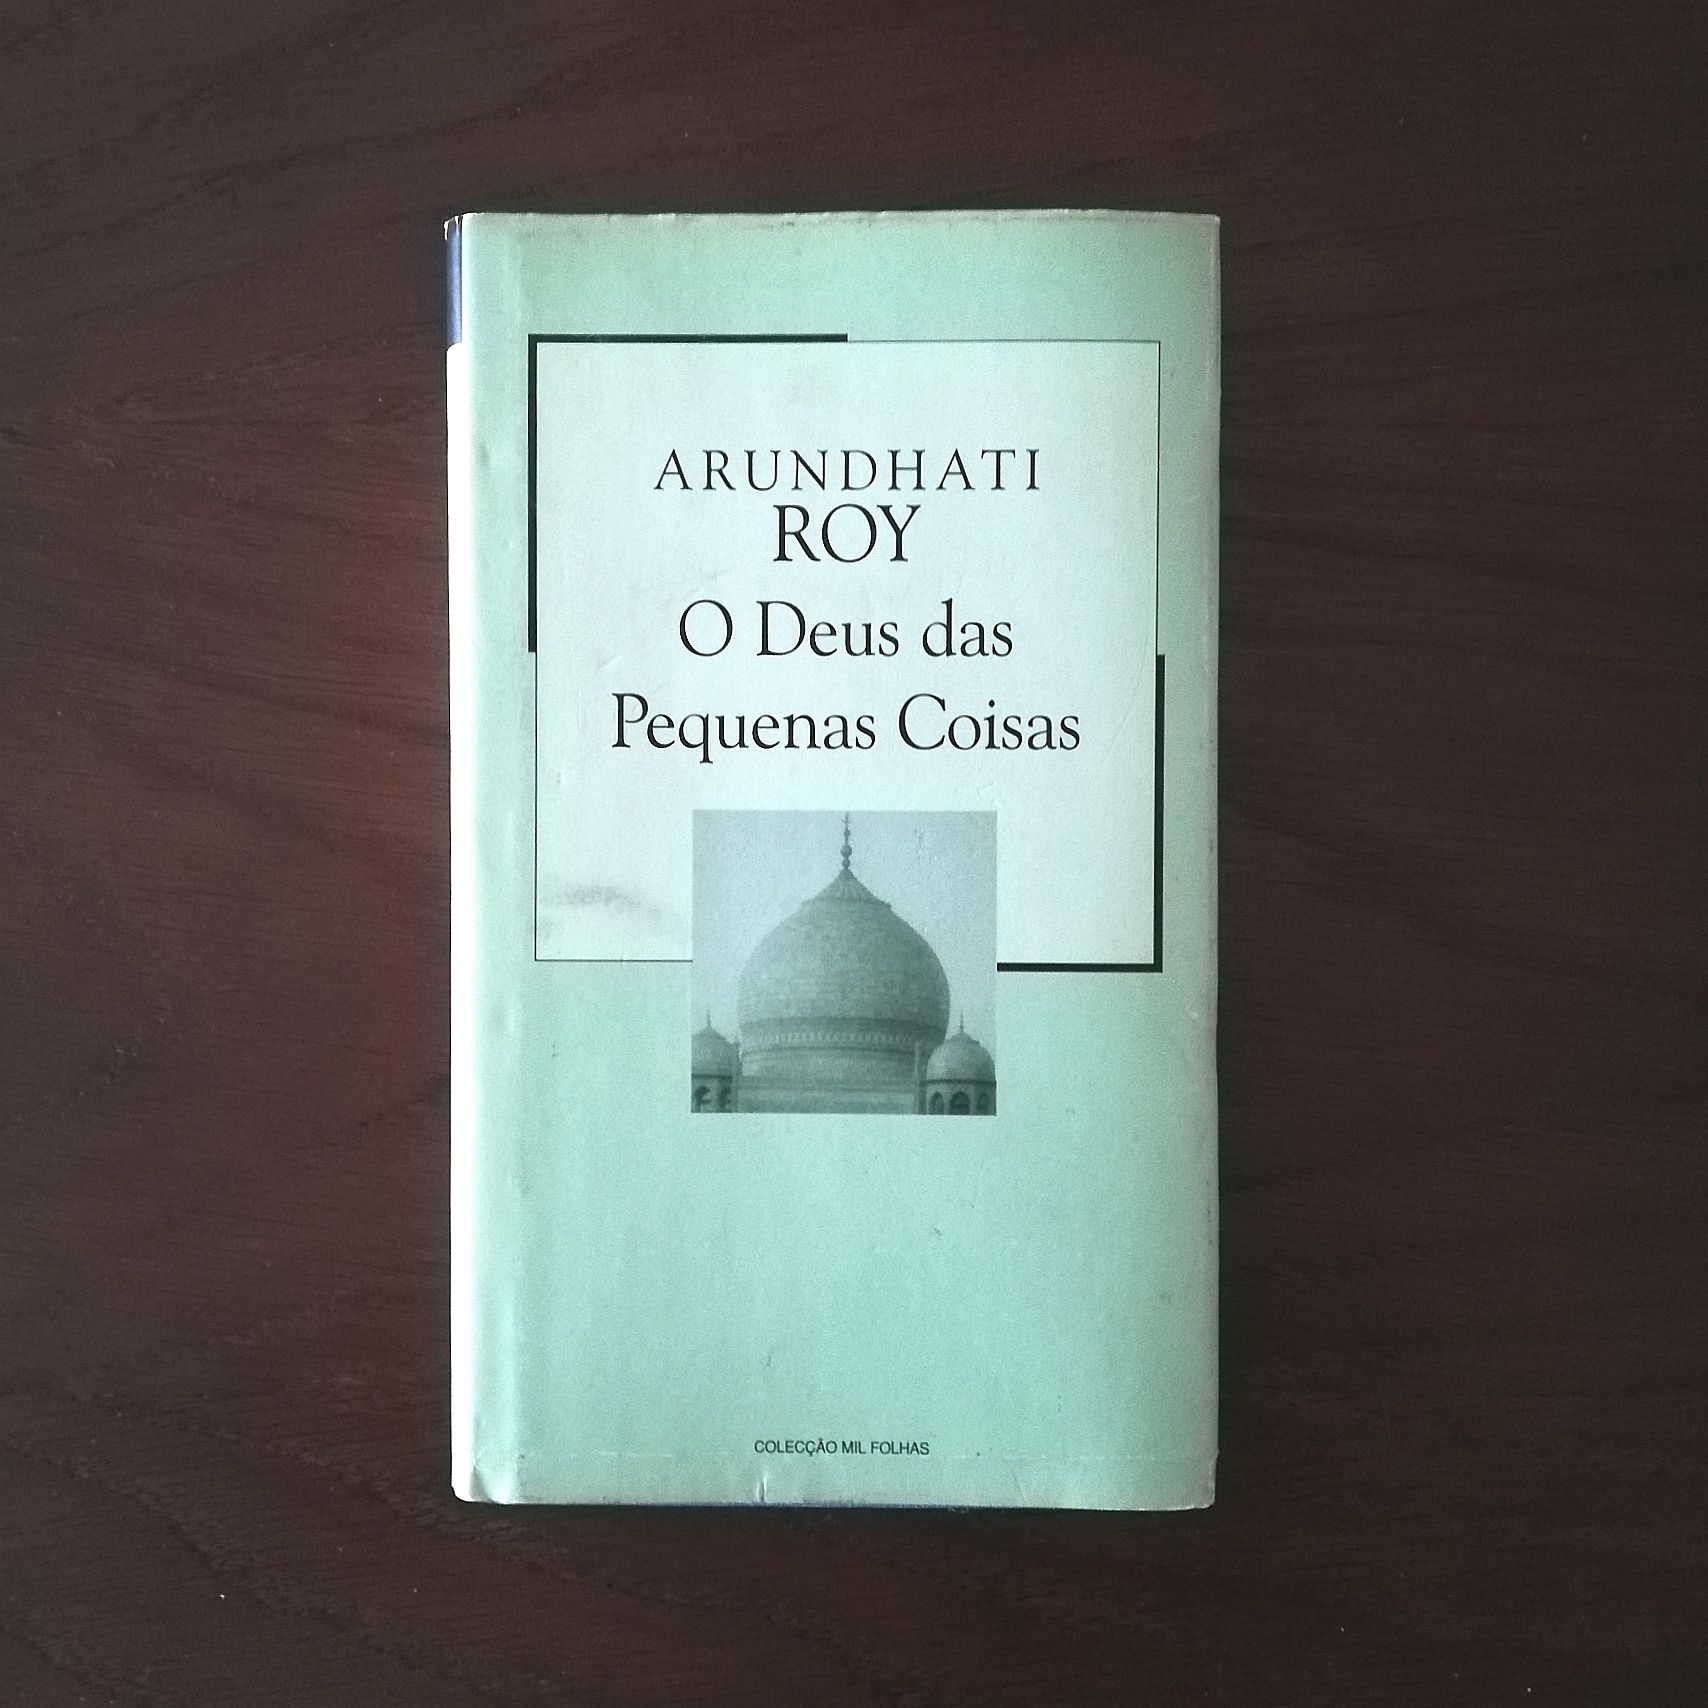 "O Deus das pequenas coisas", Arundhati Roy, 2003